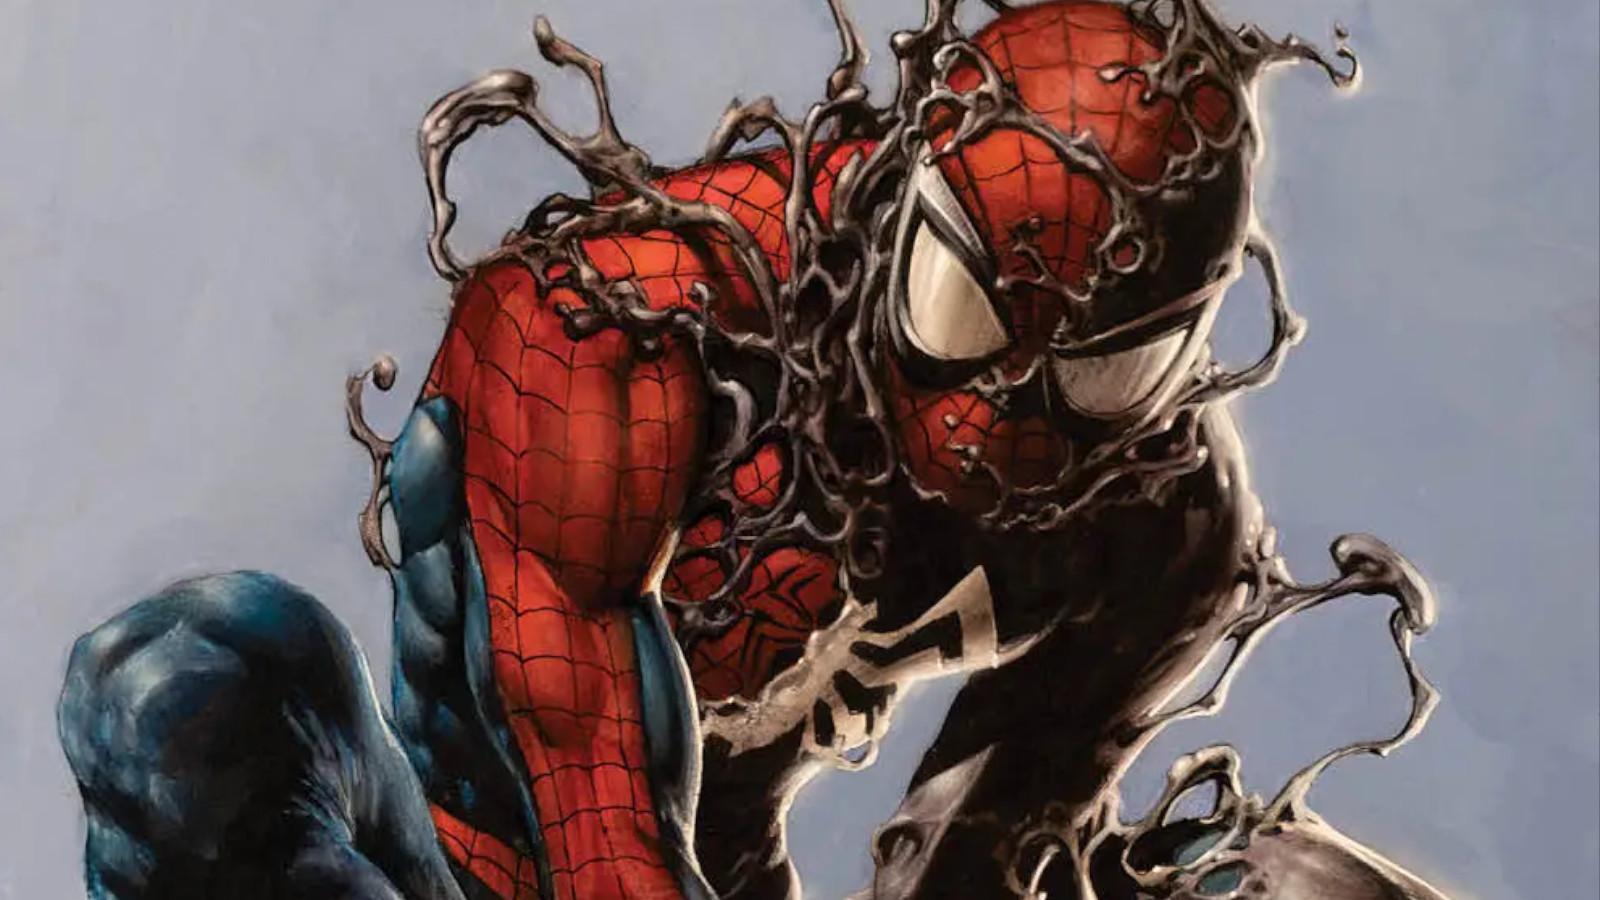 Amazing Spider-Man #35 variant cover art